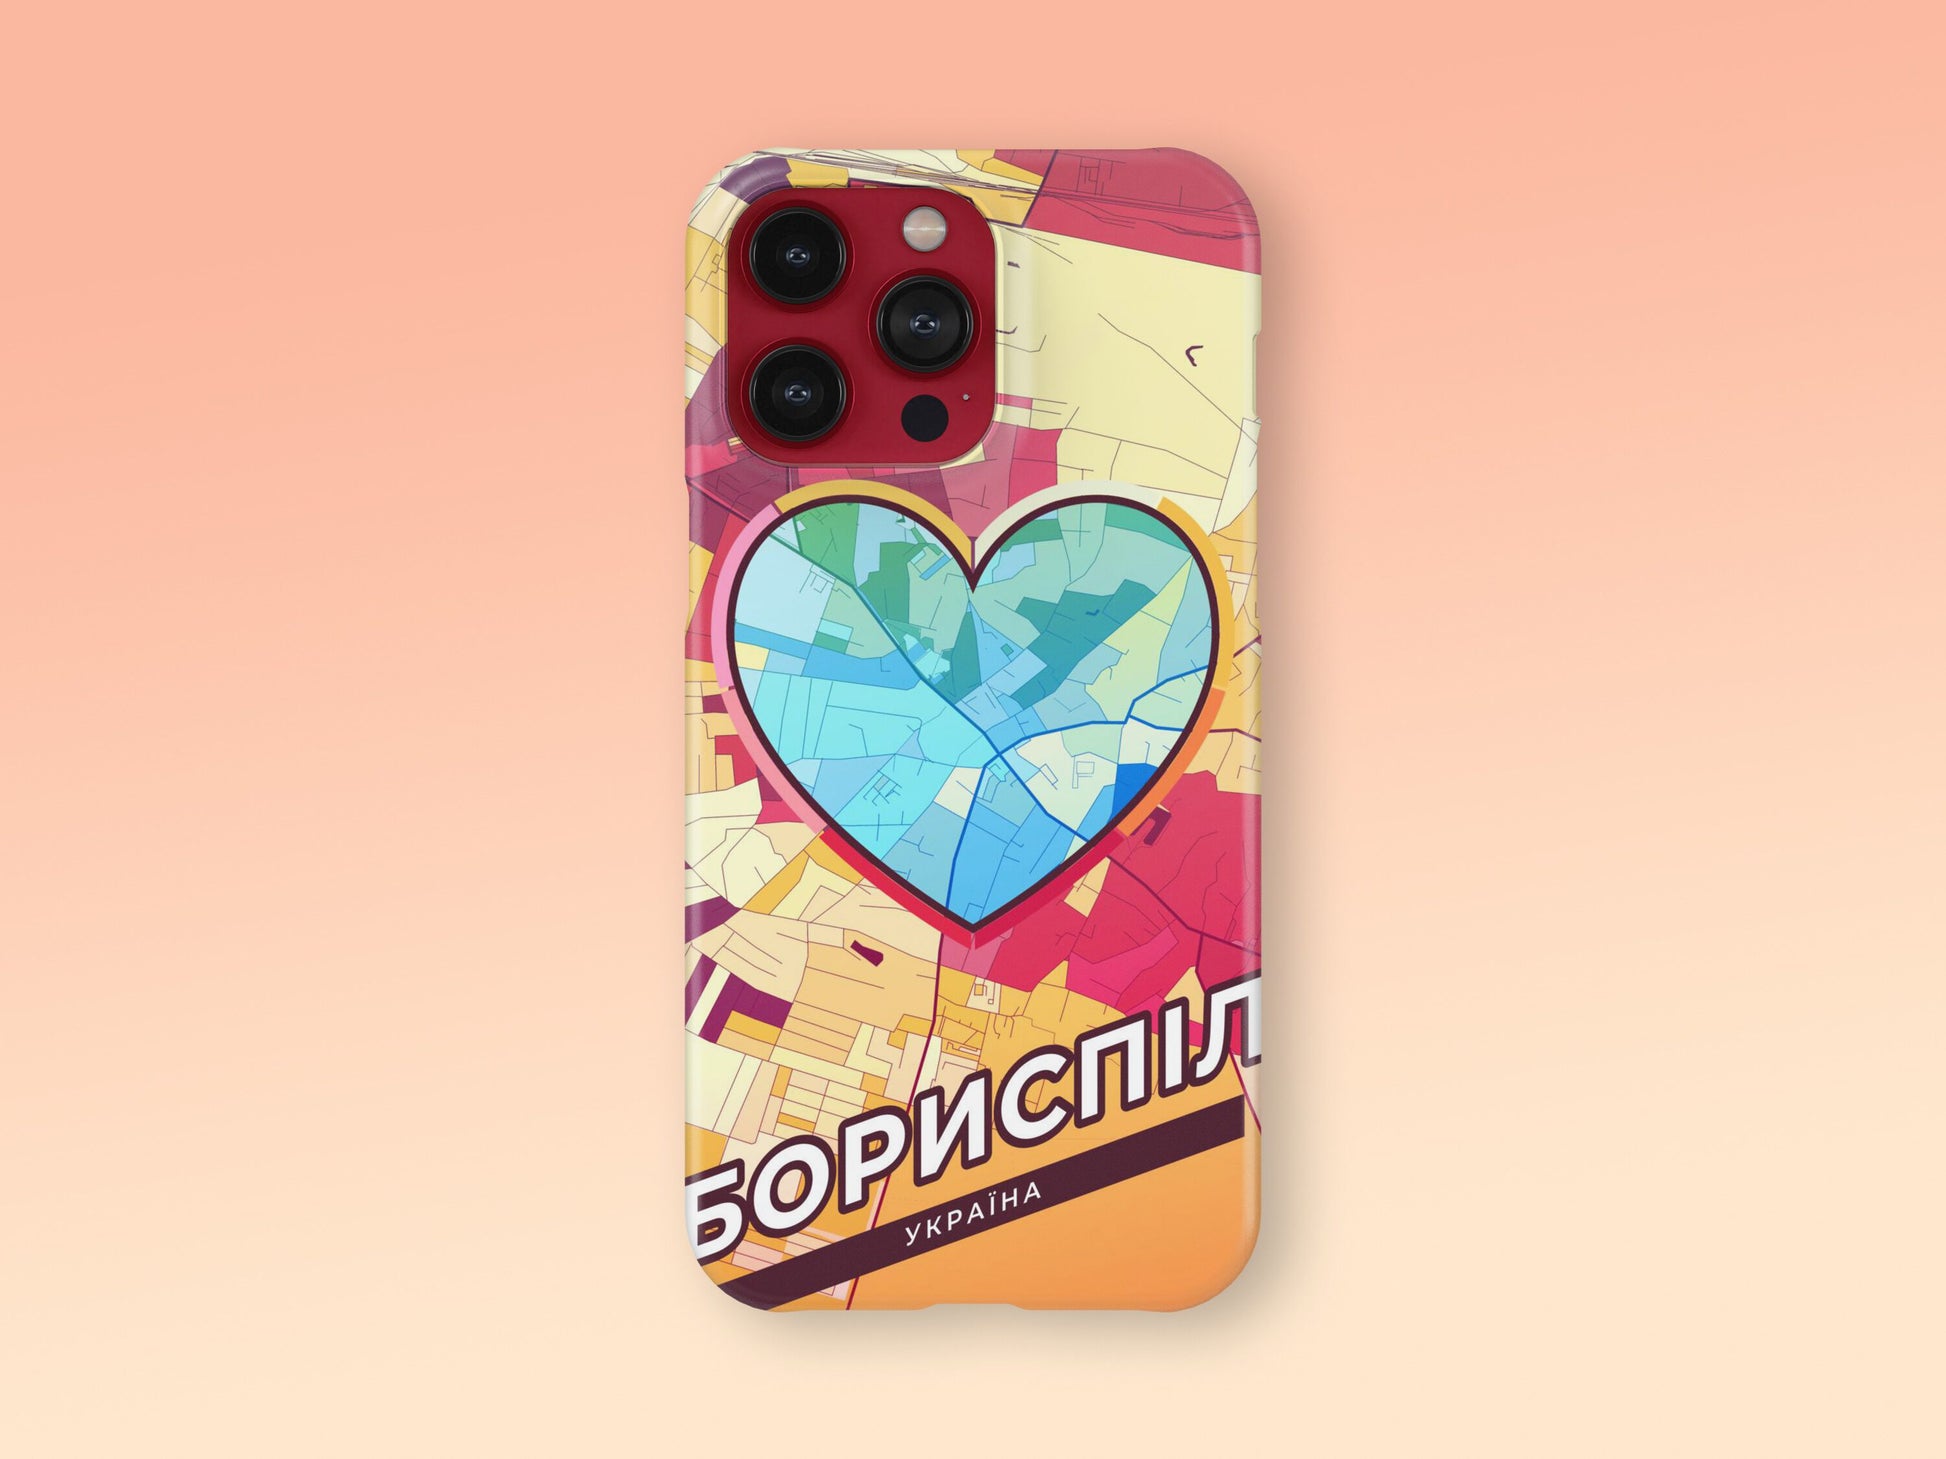 Boryspil Ukraine slim phone case with colorful icon. Birthday, wedding or housewarming gift. Couple match cases. 2